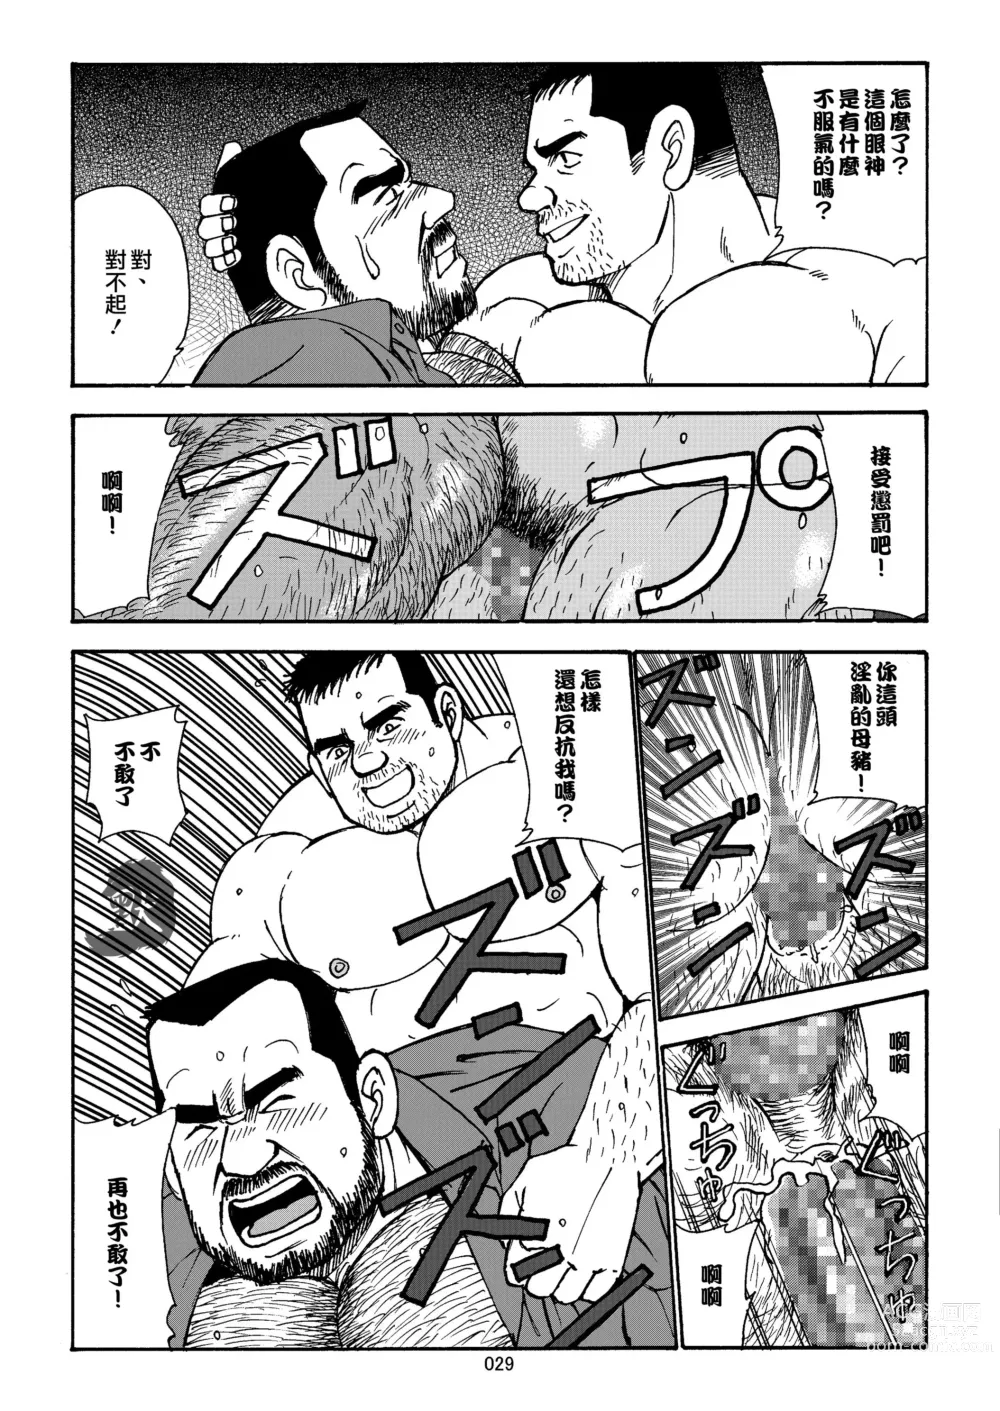 Page 29 of manga おいしい性活